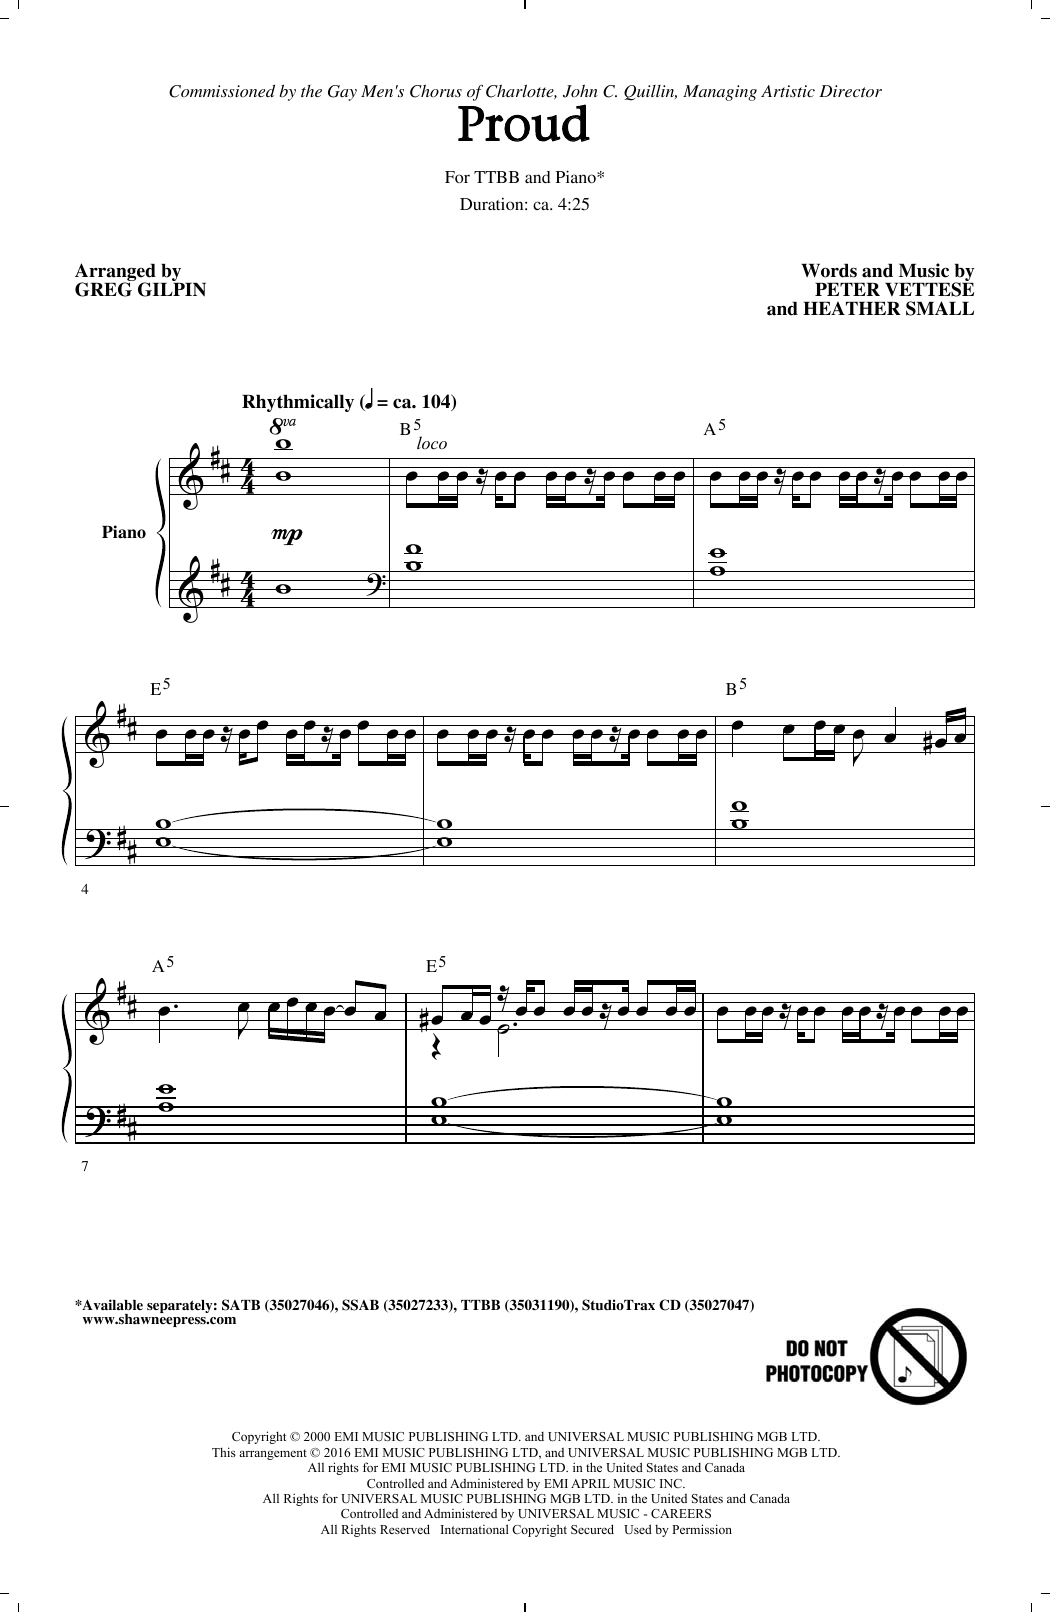 Greg Gilpin Proud sheet music notes and chords arranged for TTBB Choir